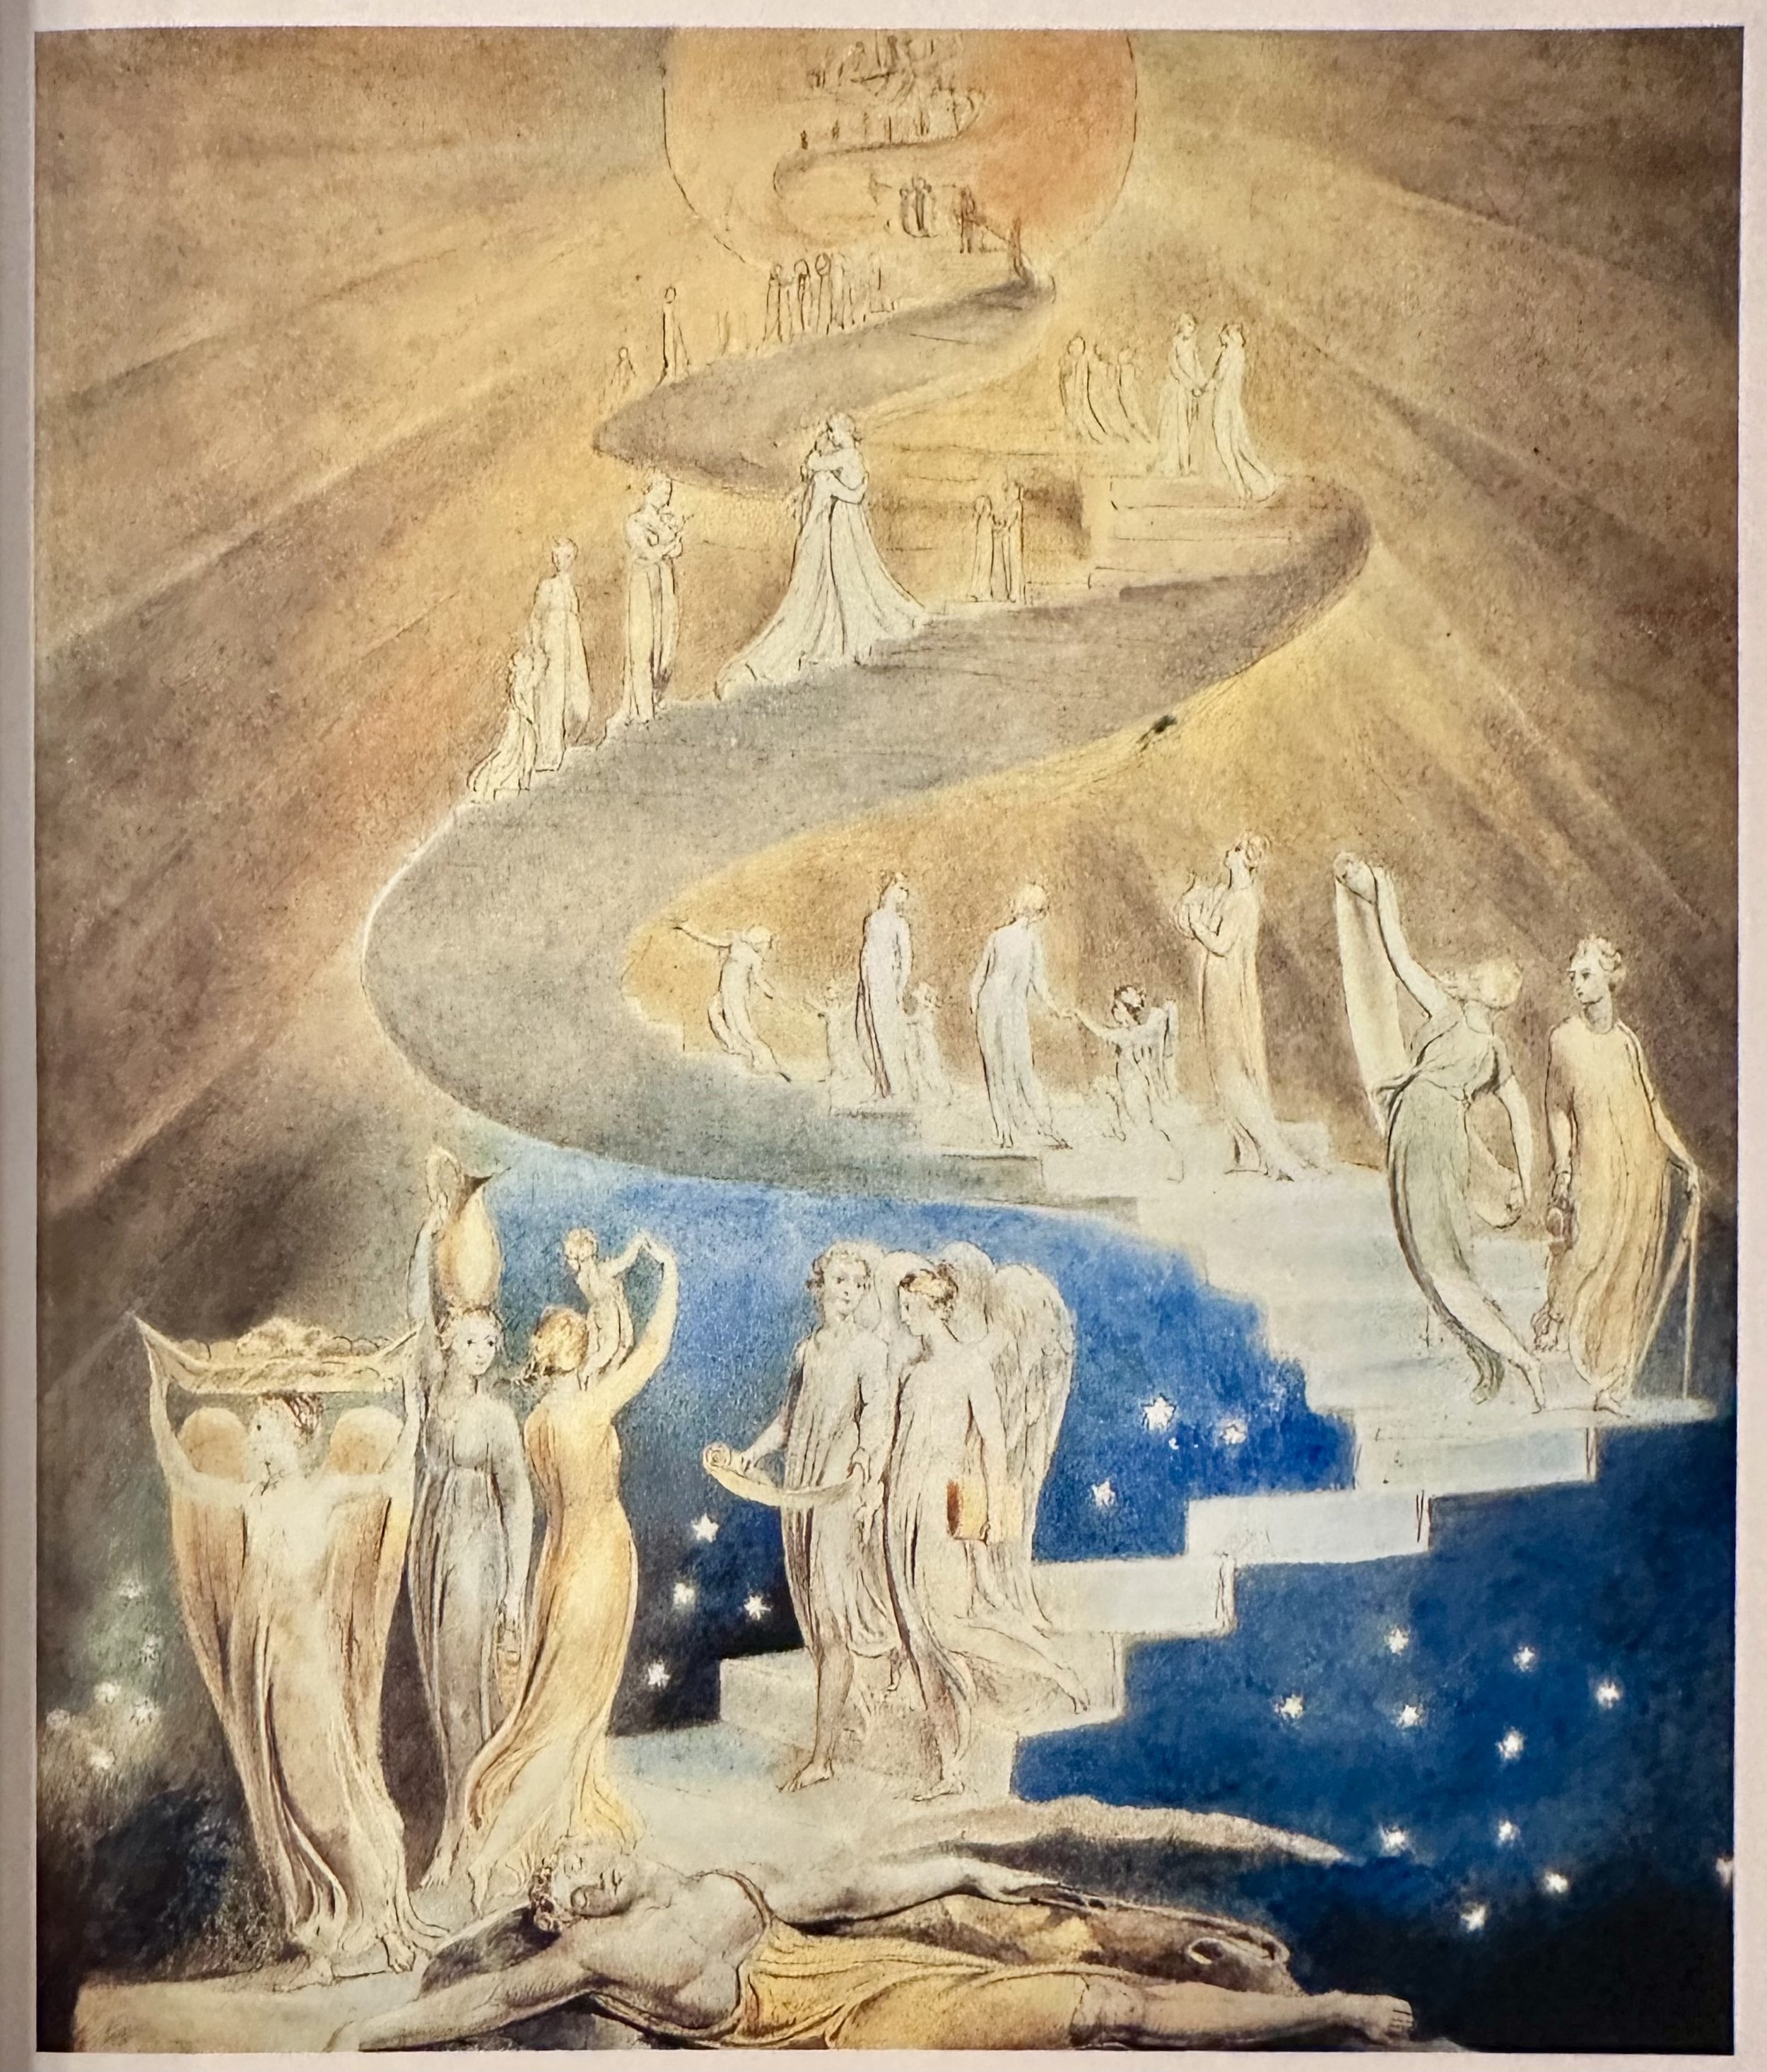 1806 Jacobs Ladder by William Blake.jpeg